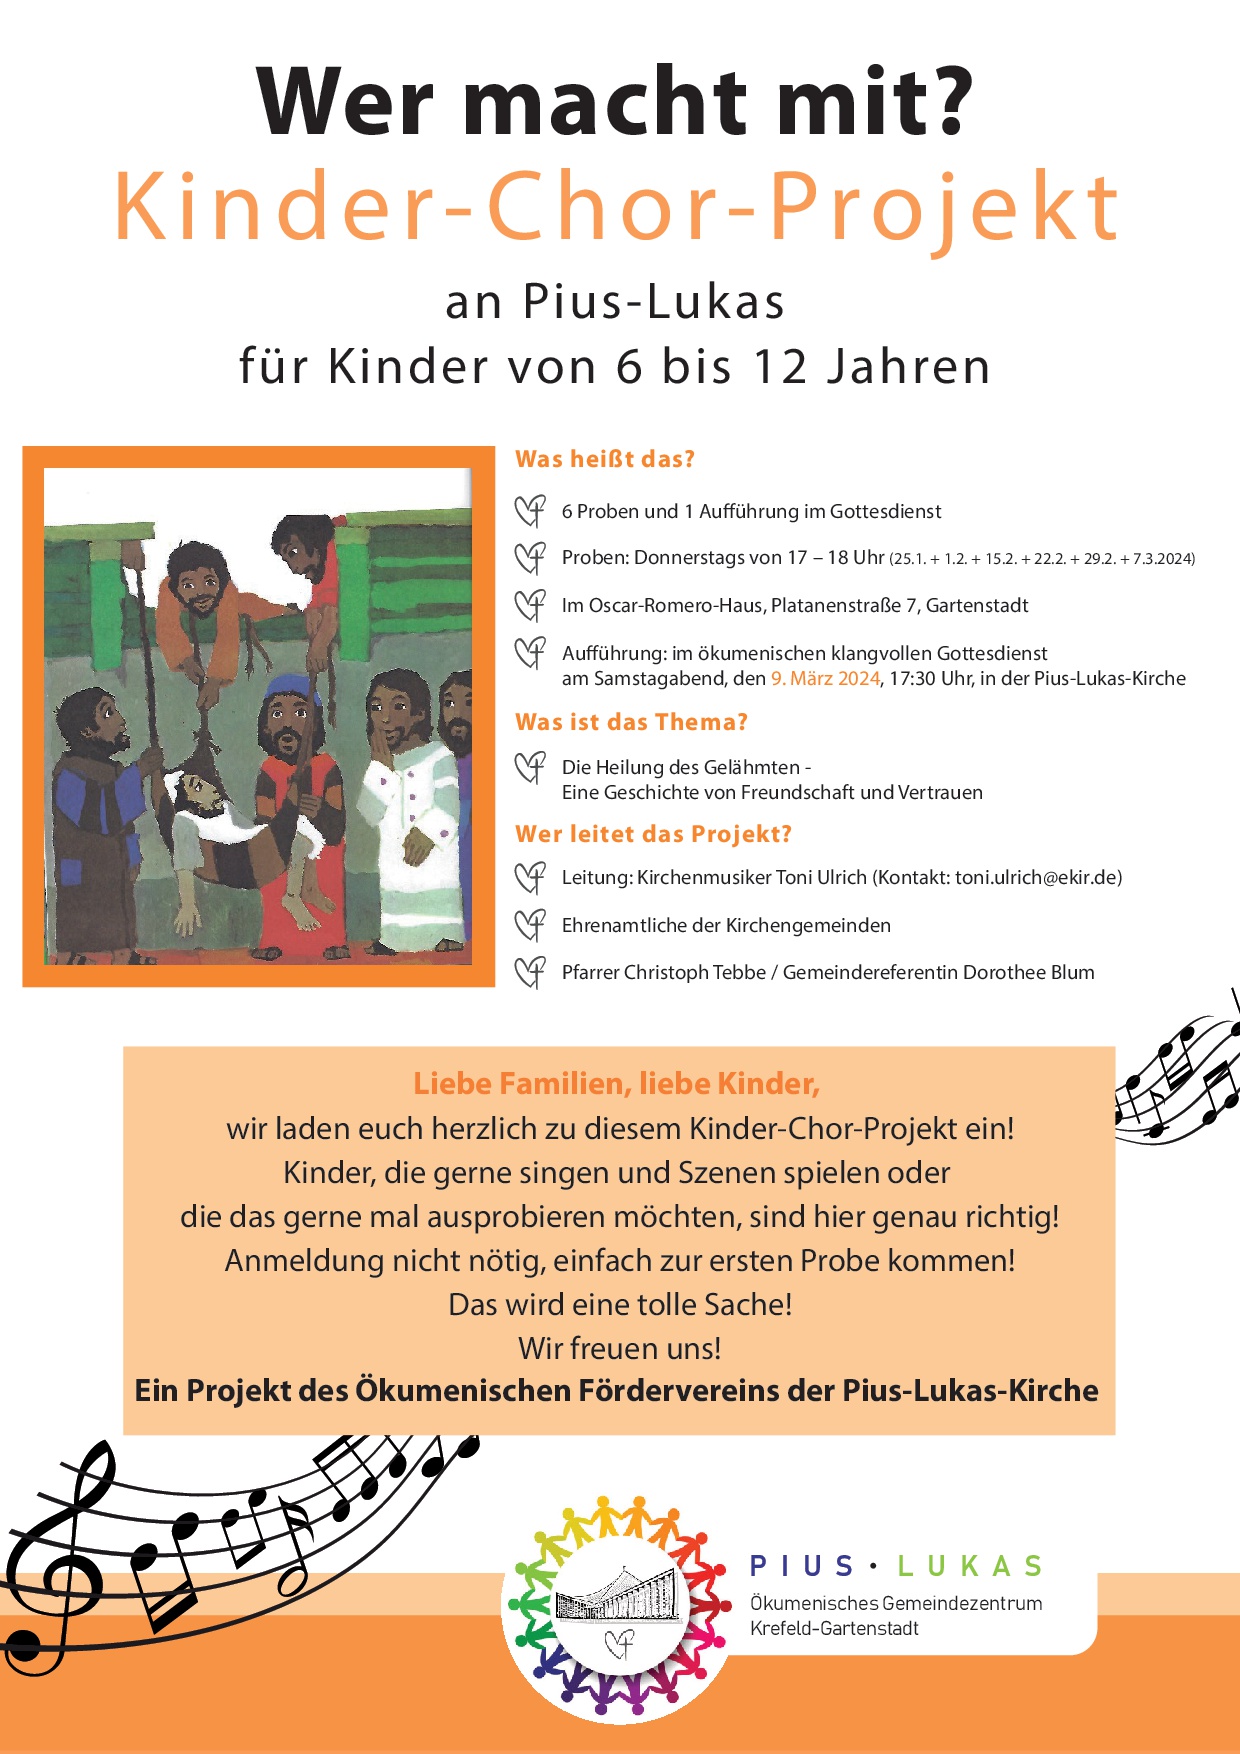 Kinder-Chor-Projekt Einladung (c) Pius-Lukas-Krefeld